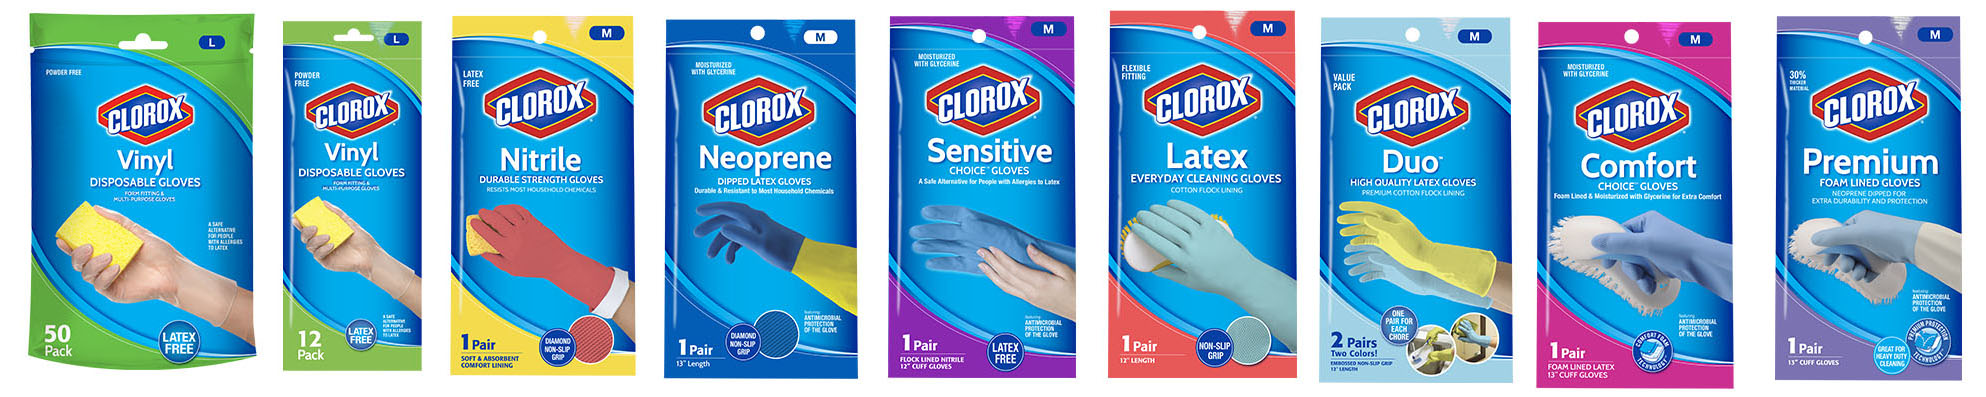 Clorox Brand Package Design